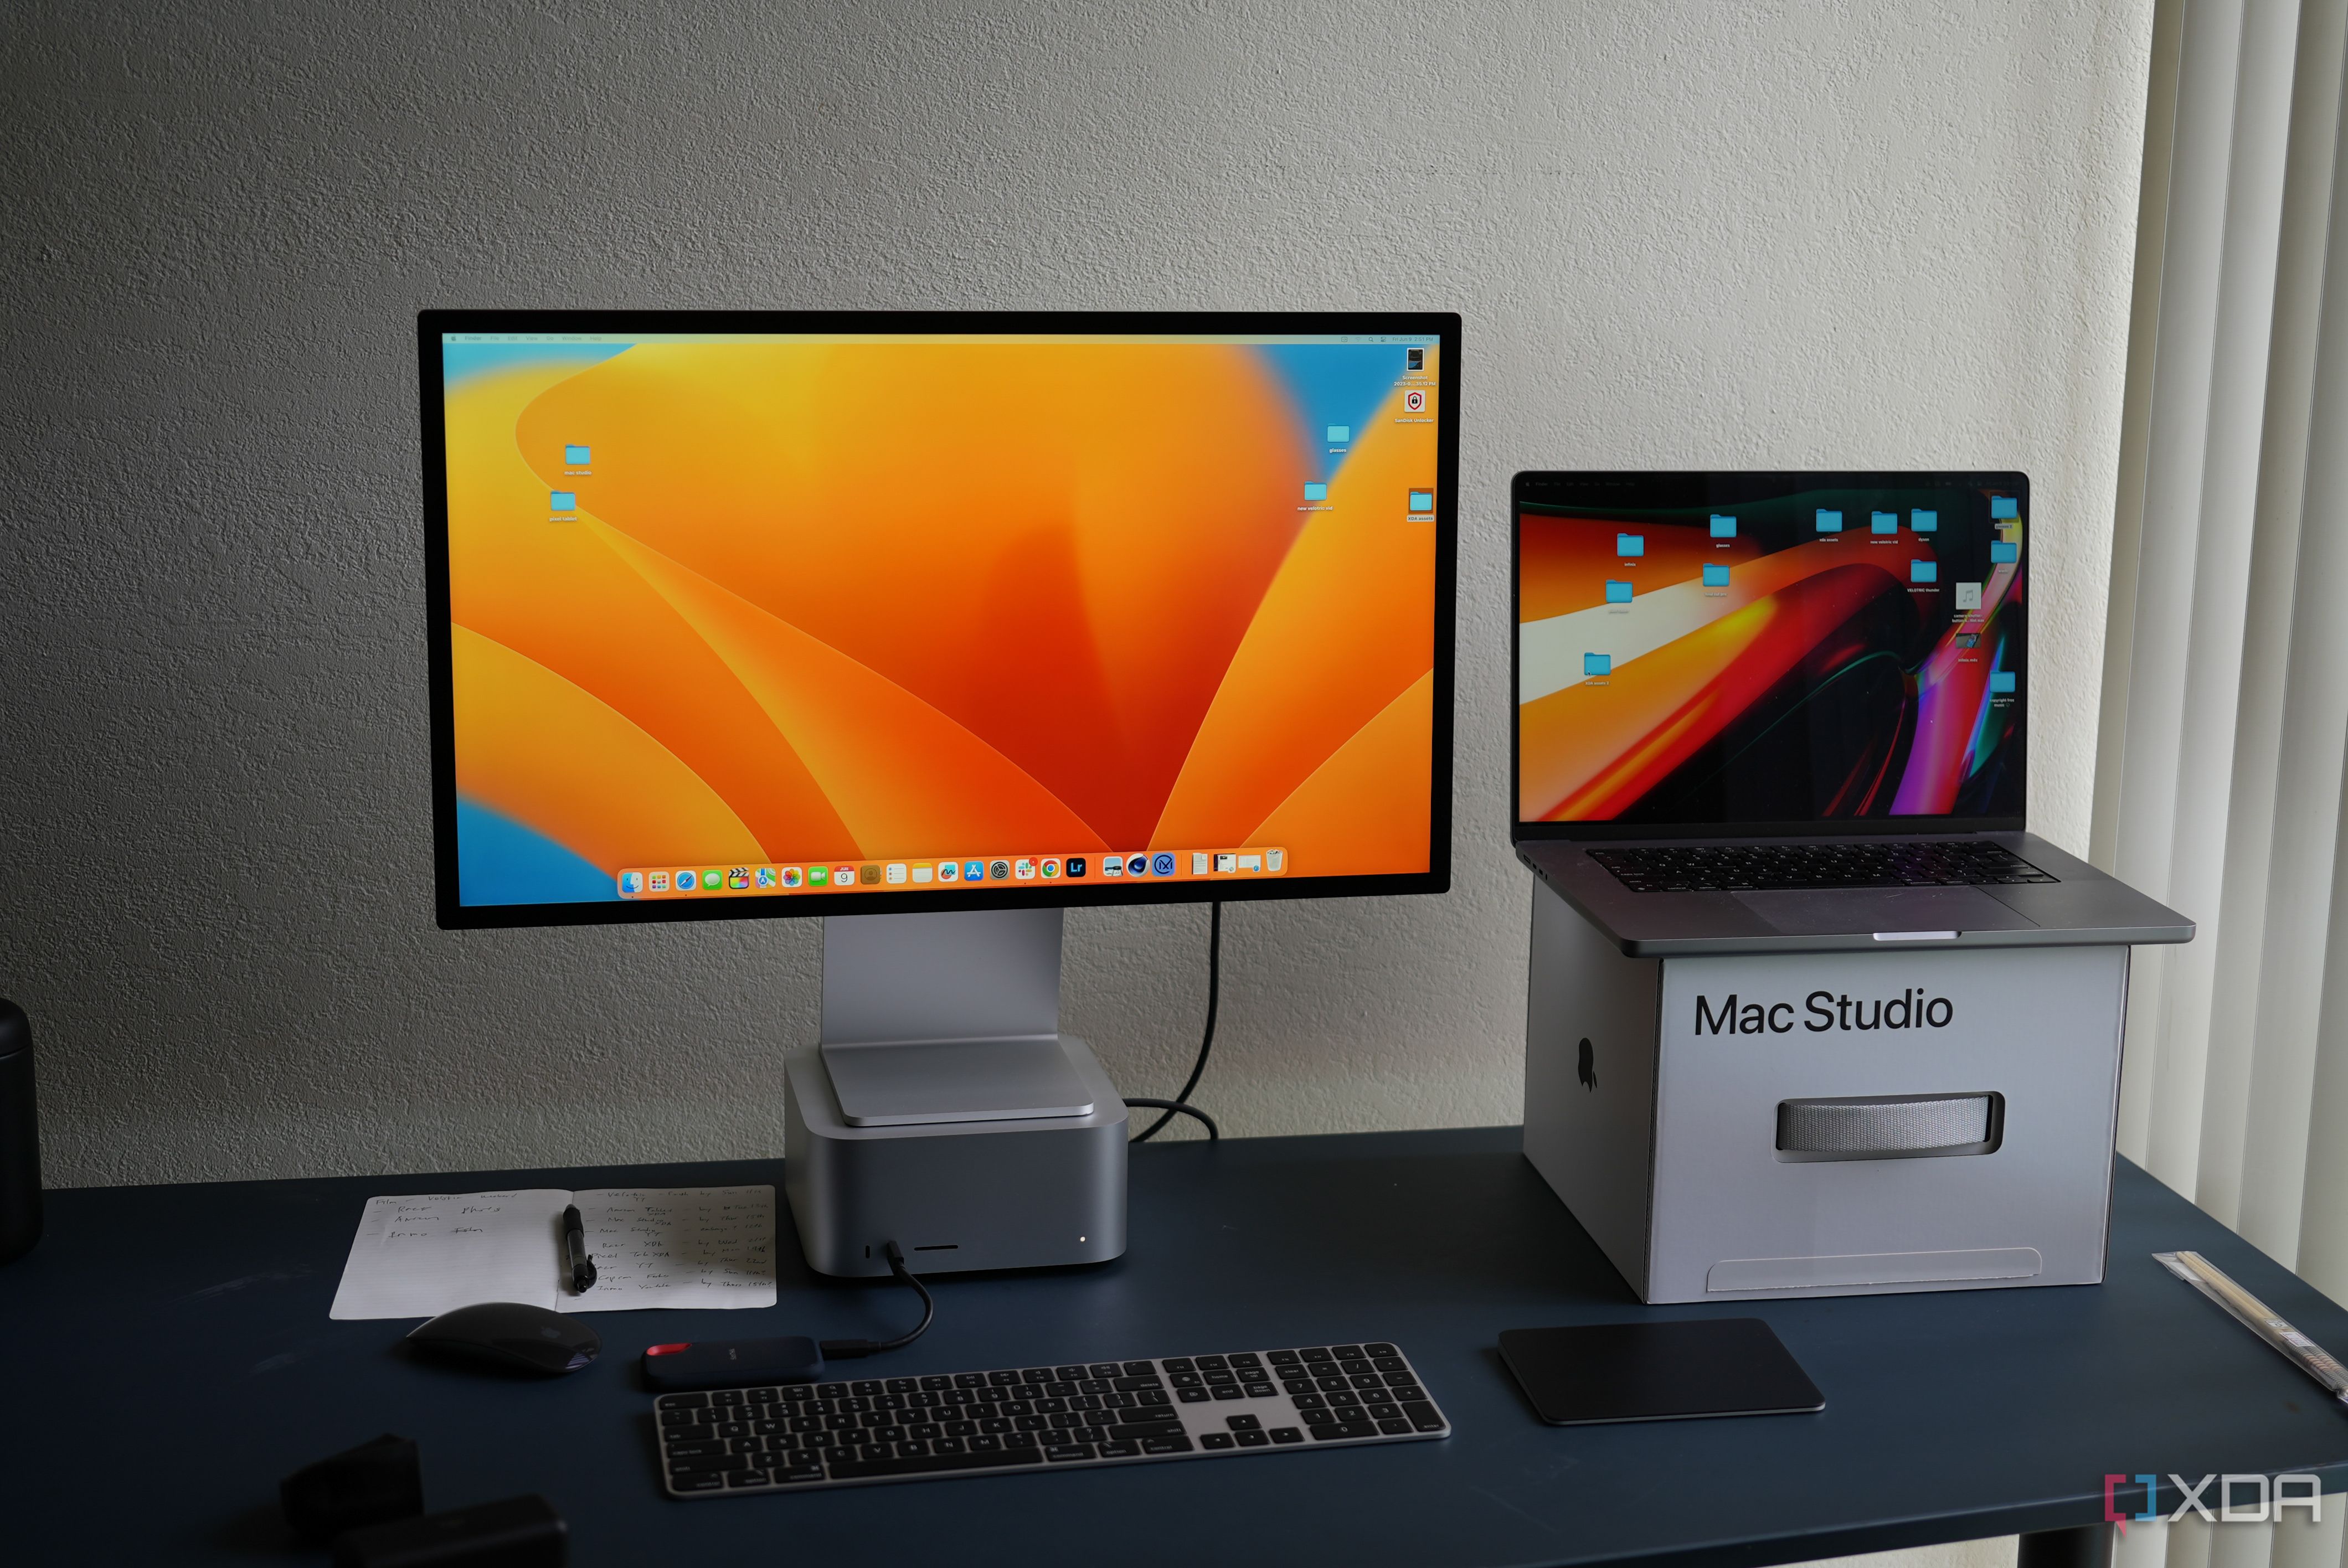 Mac Studio and MacBook Pro side by side